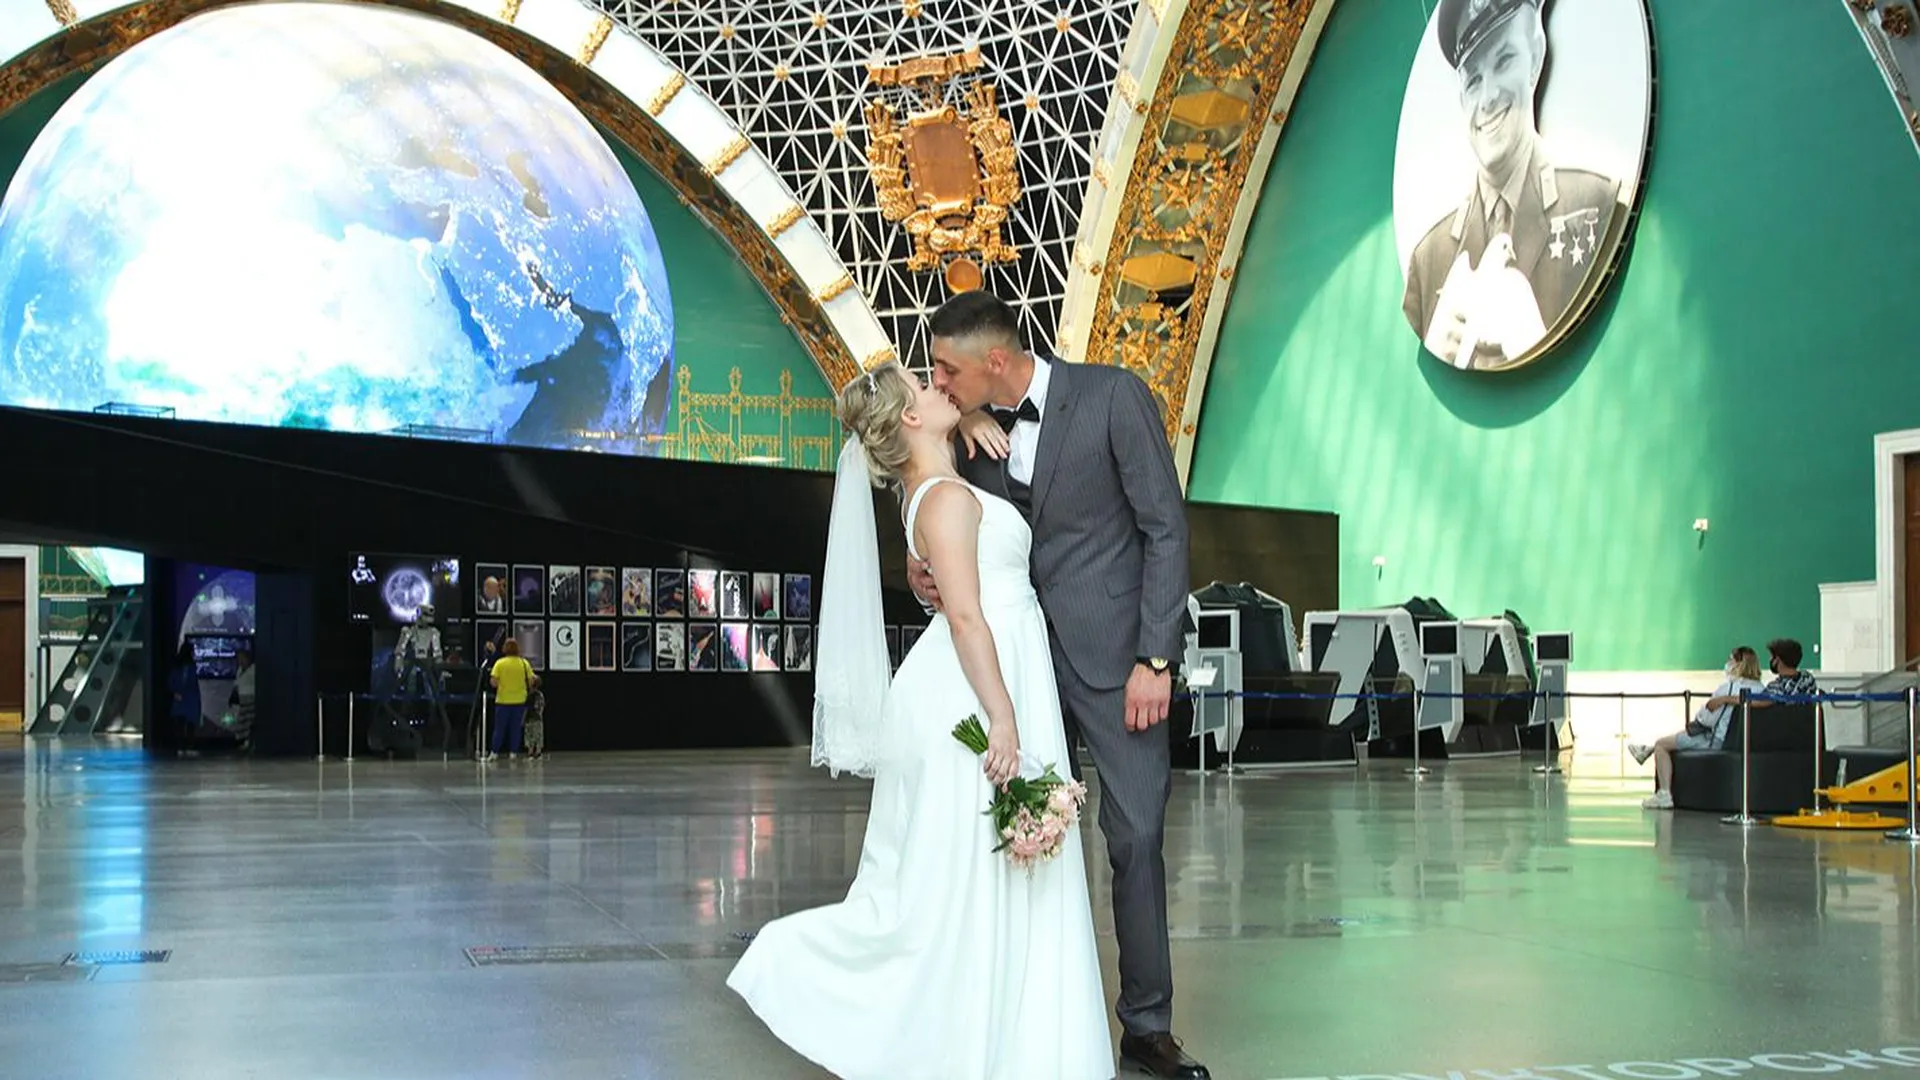 Москвичам рассказали, как проходит церемония заключения брака в павильоне «Космос» на ВДНХ